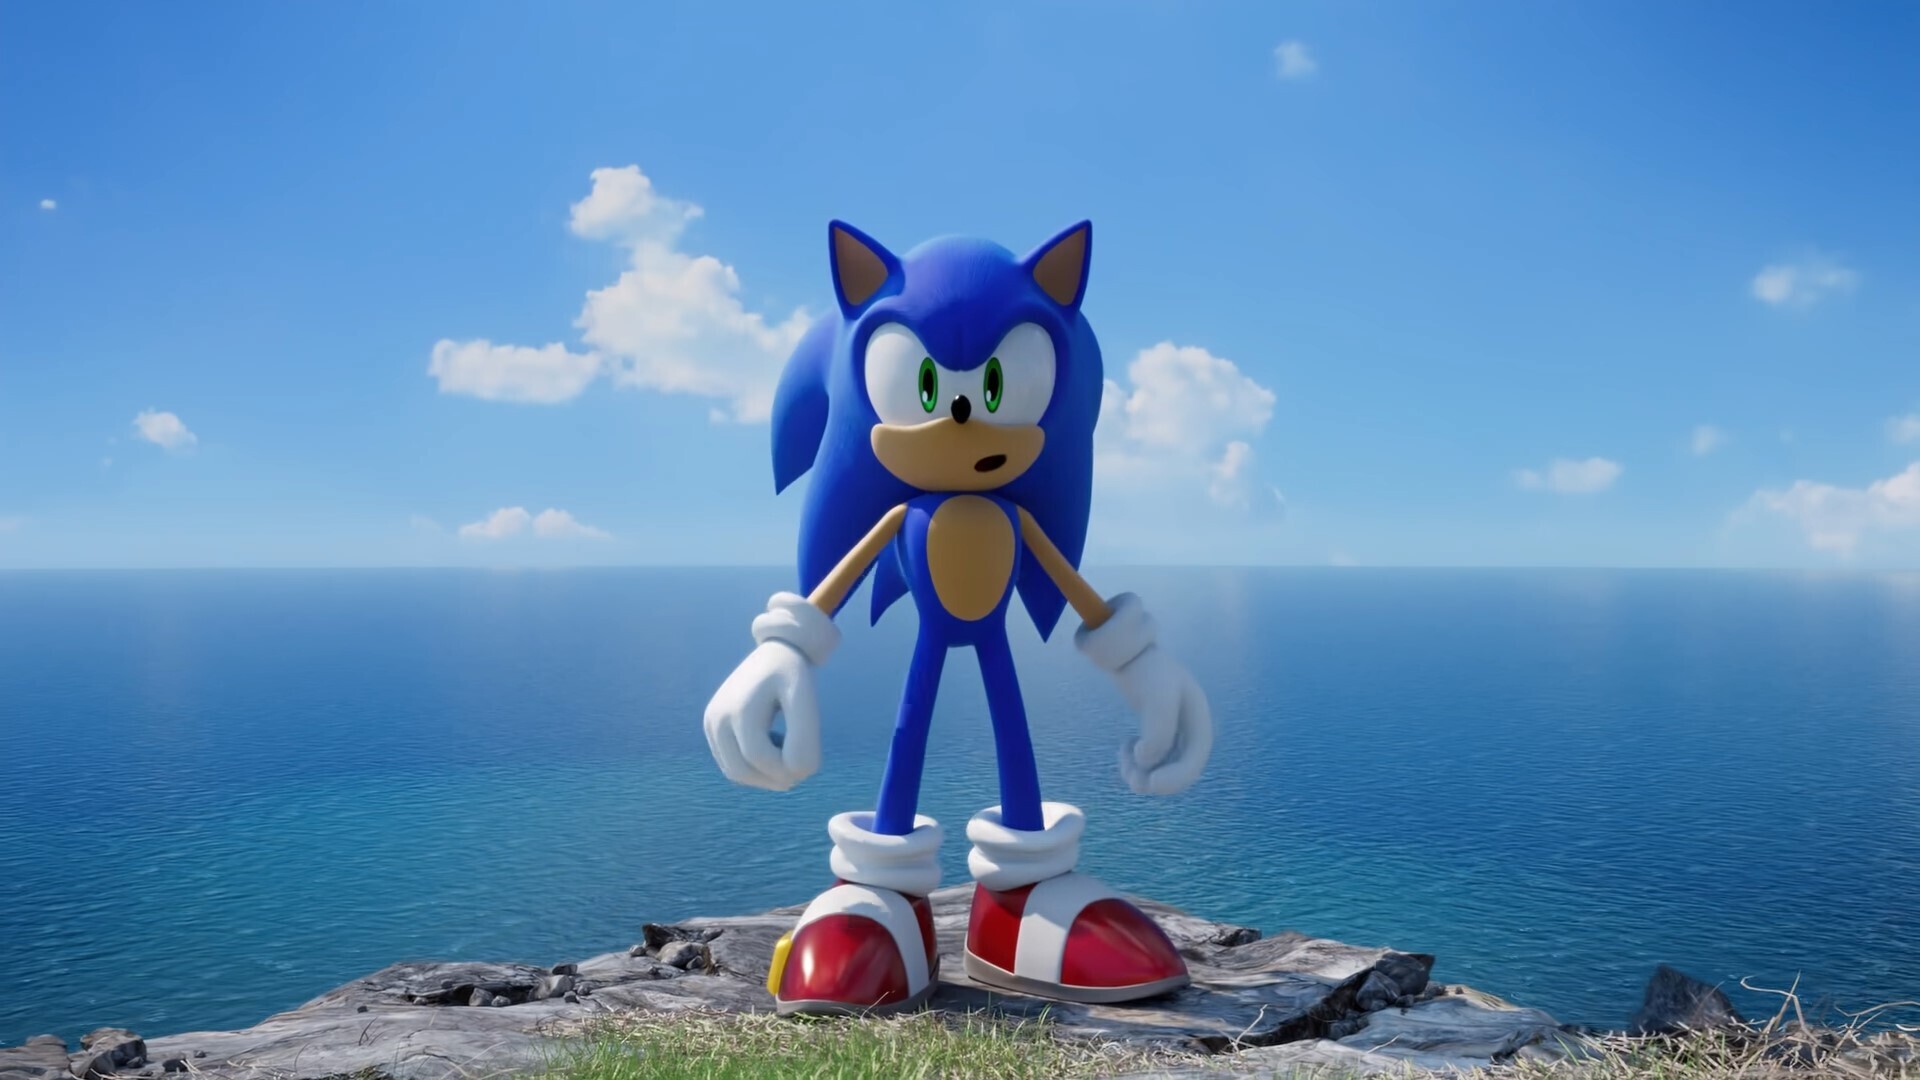 Sonic Frontiers: The Final Horizon (2023)